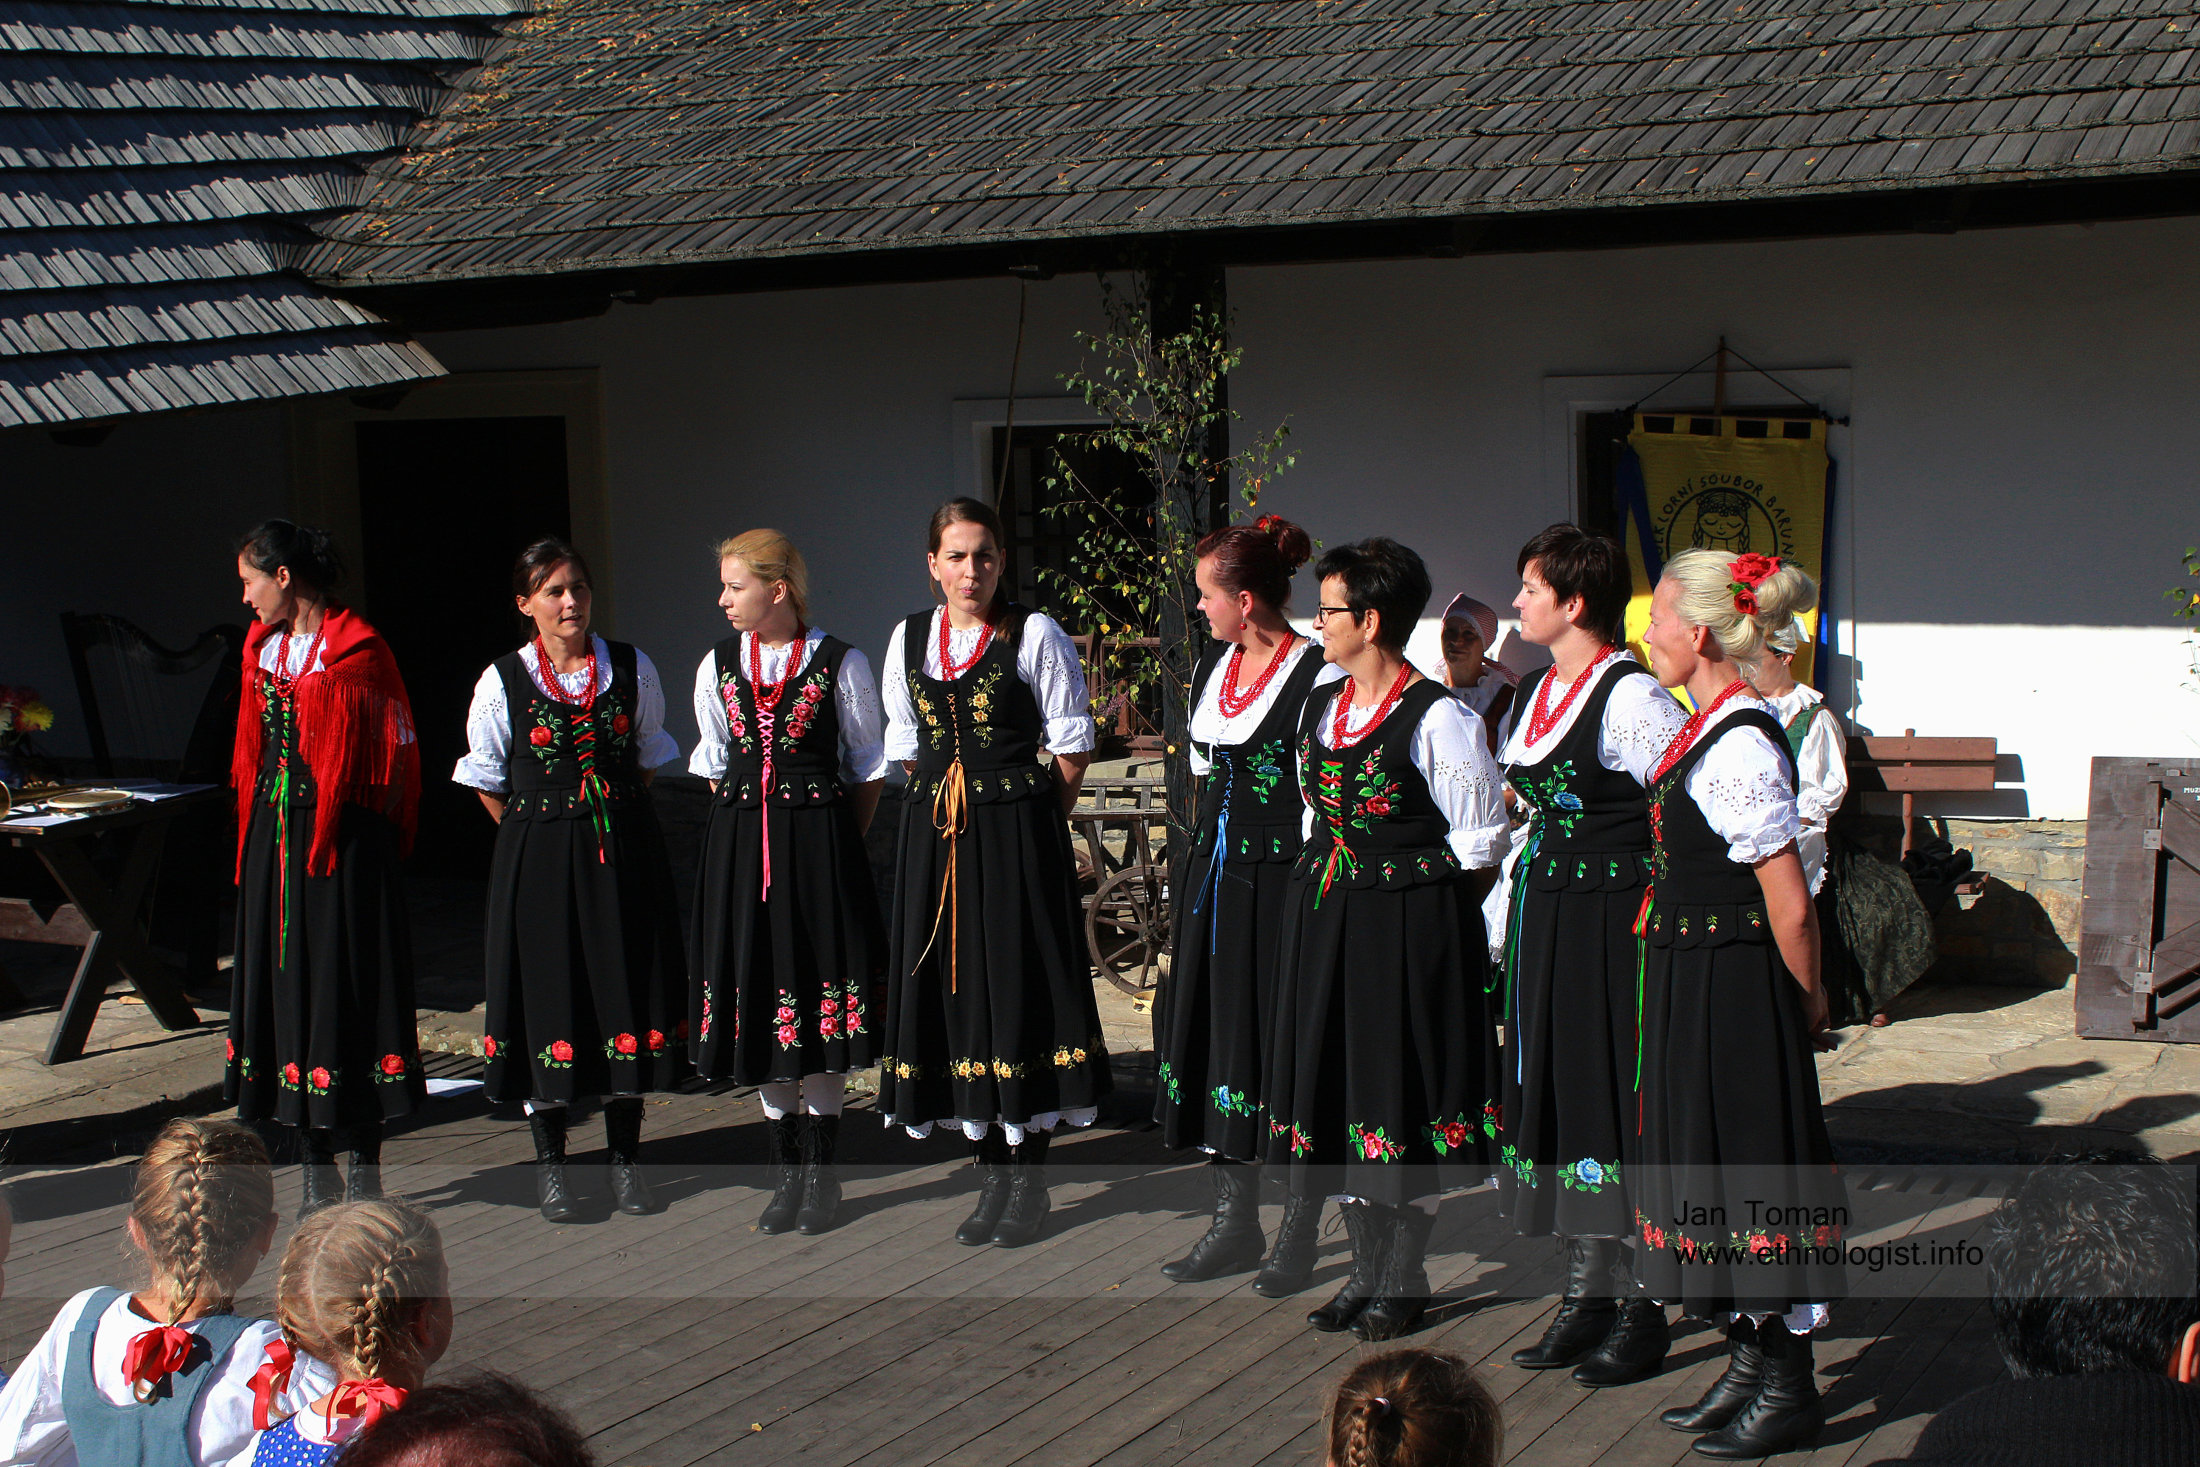 The Poland folklore band in Czech town Ceska Skalice